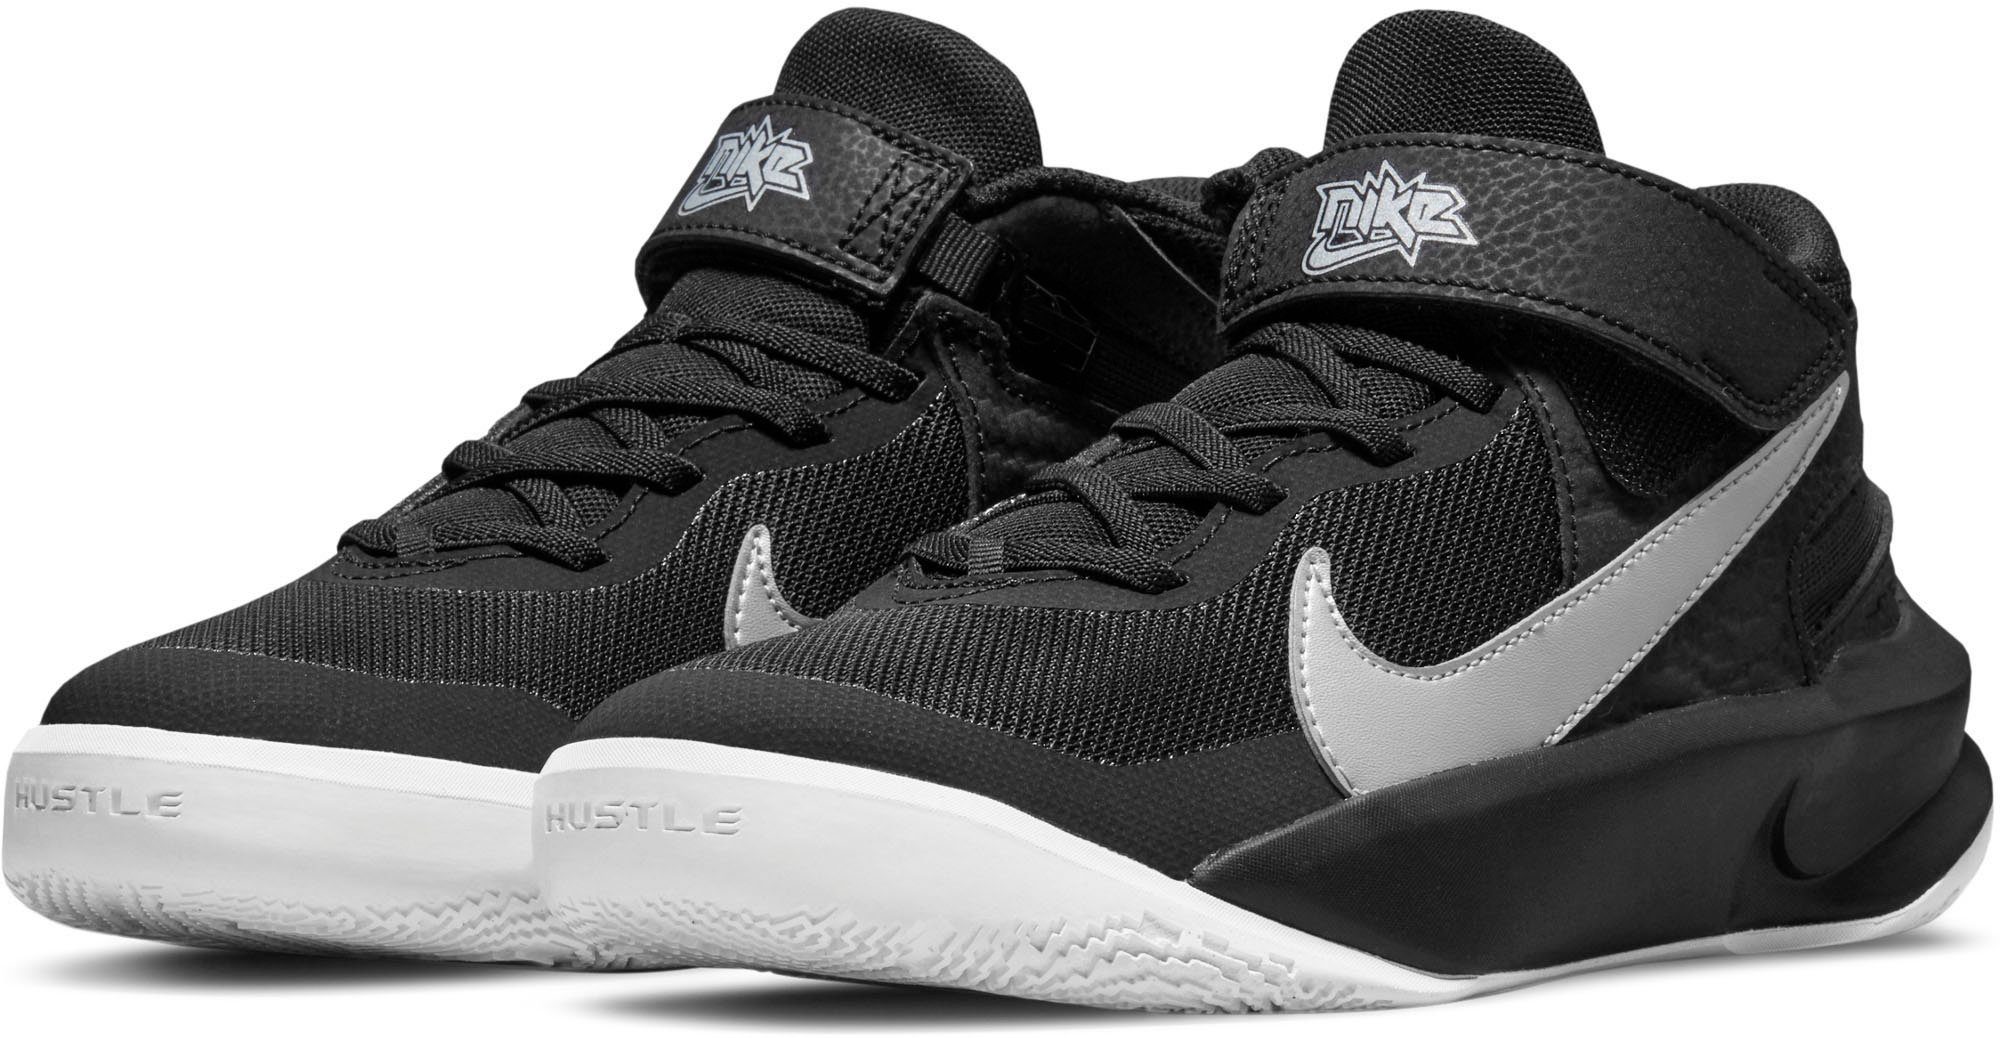 Nike Basketbalschoenen online kopen | Shop nu |